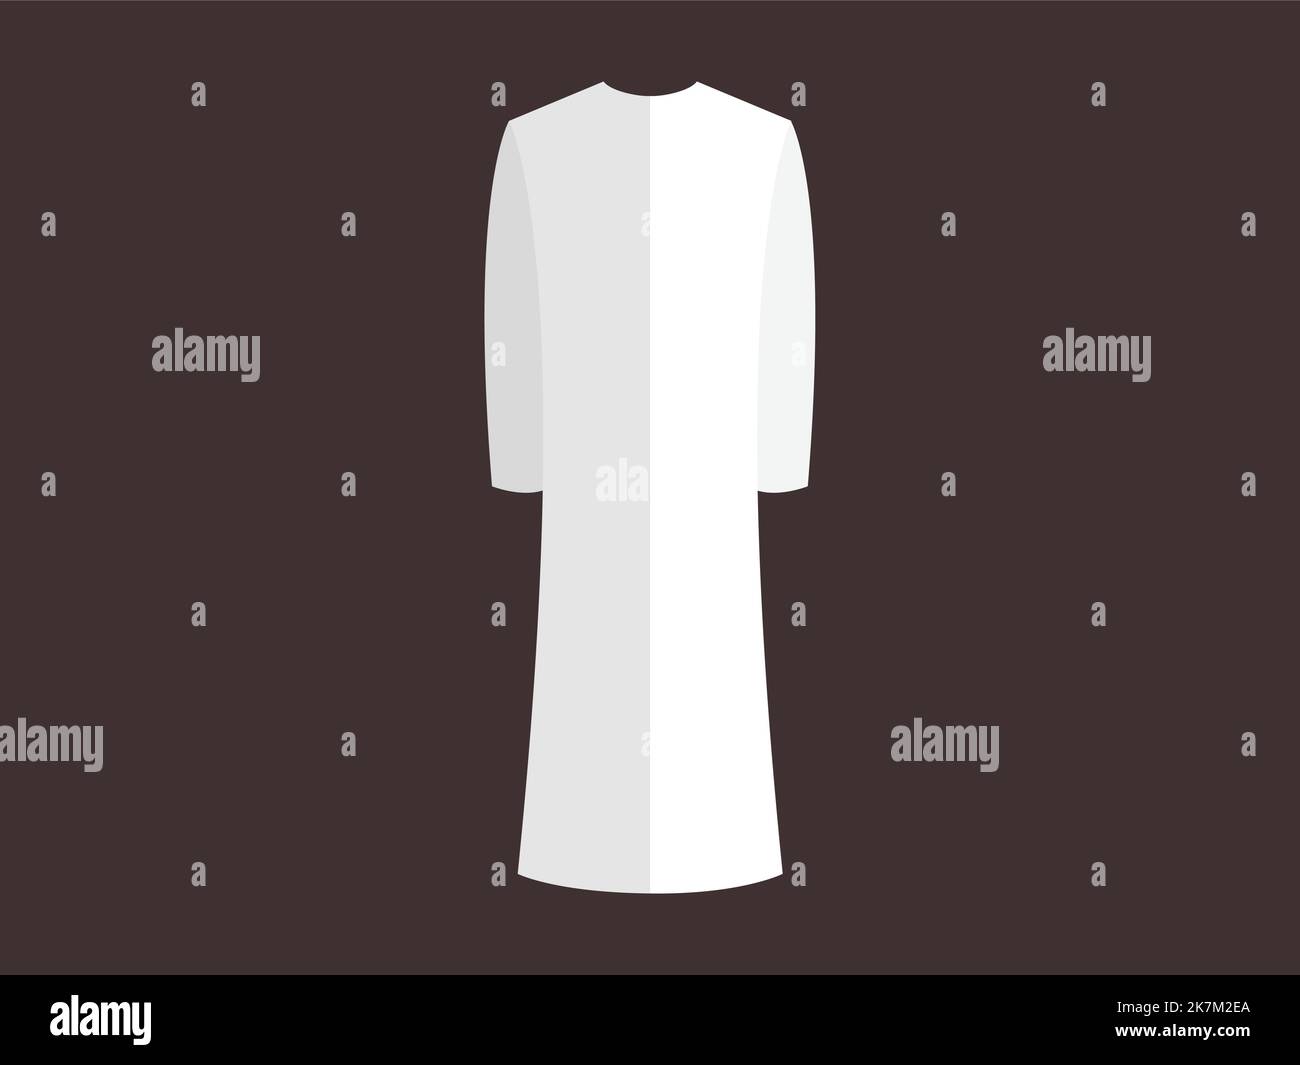 Saudi Arabi white traditional clothes vector illustration Stock Vector ...